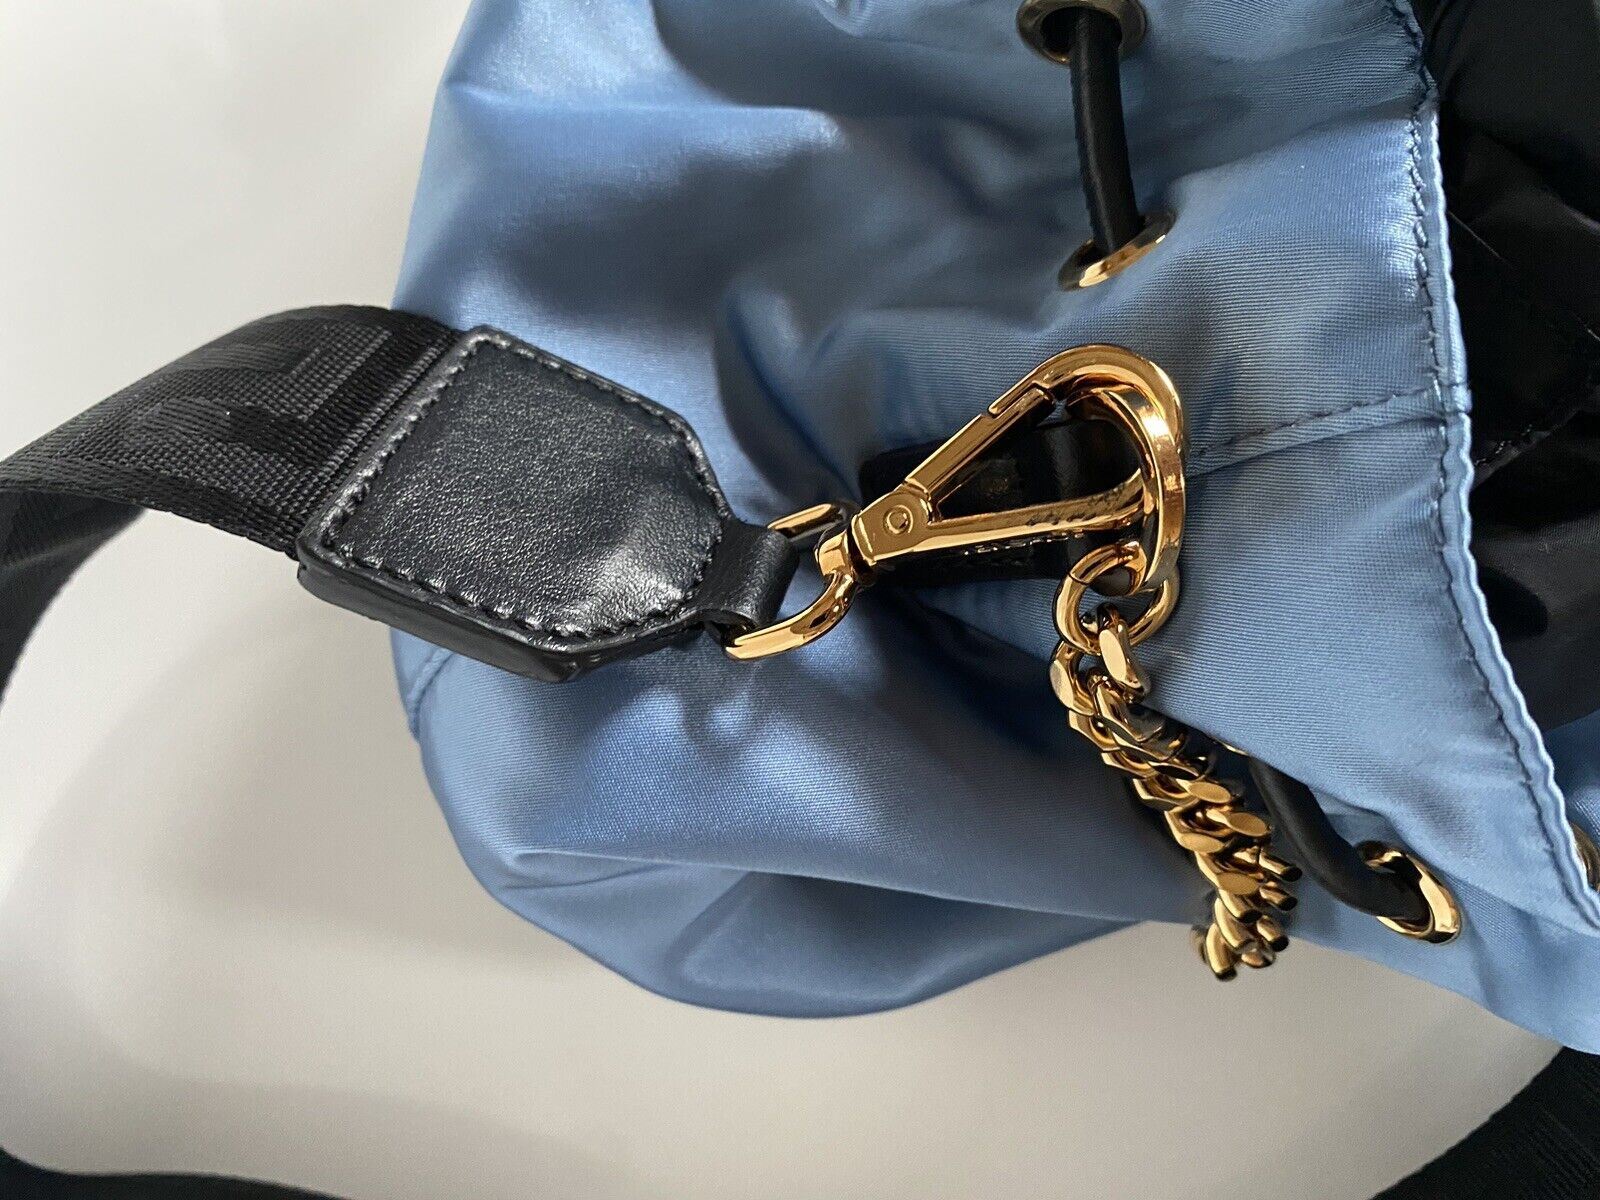 NWT Versace Nylon/Leather Cornflower Blue Mini Backpack Italy 1002875 1A02155